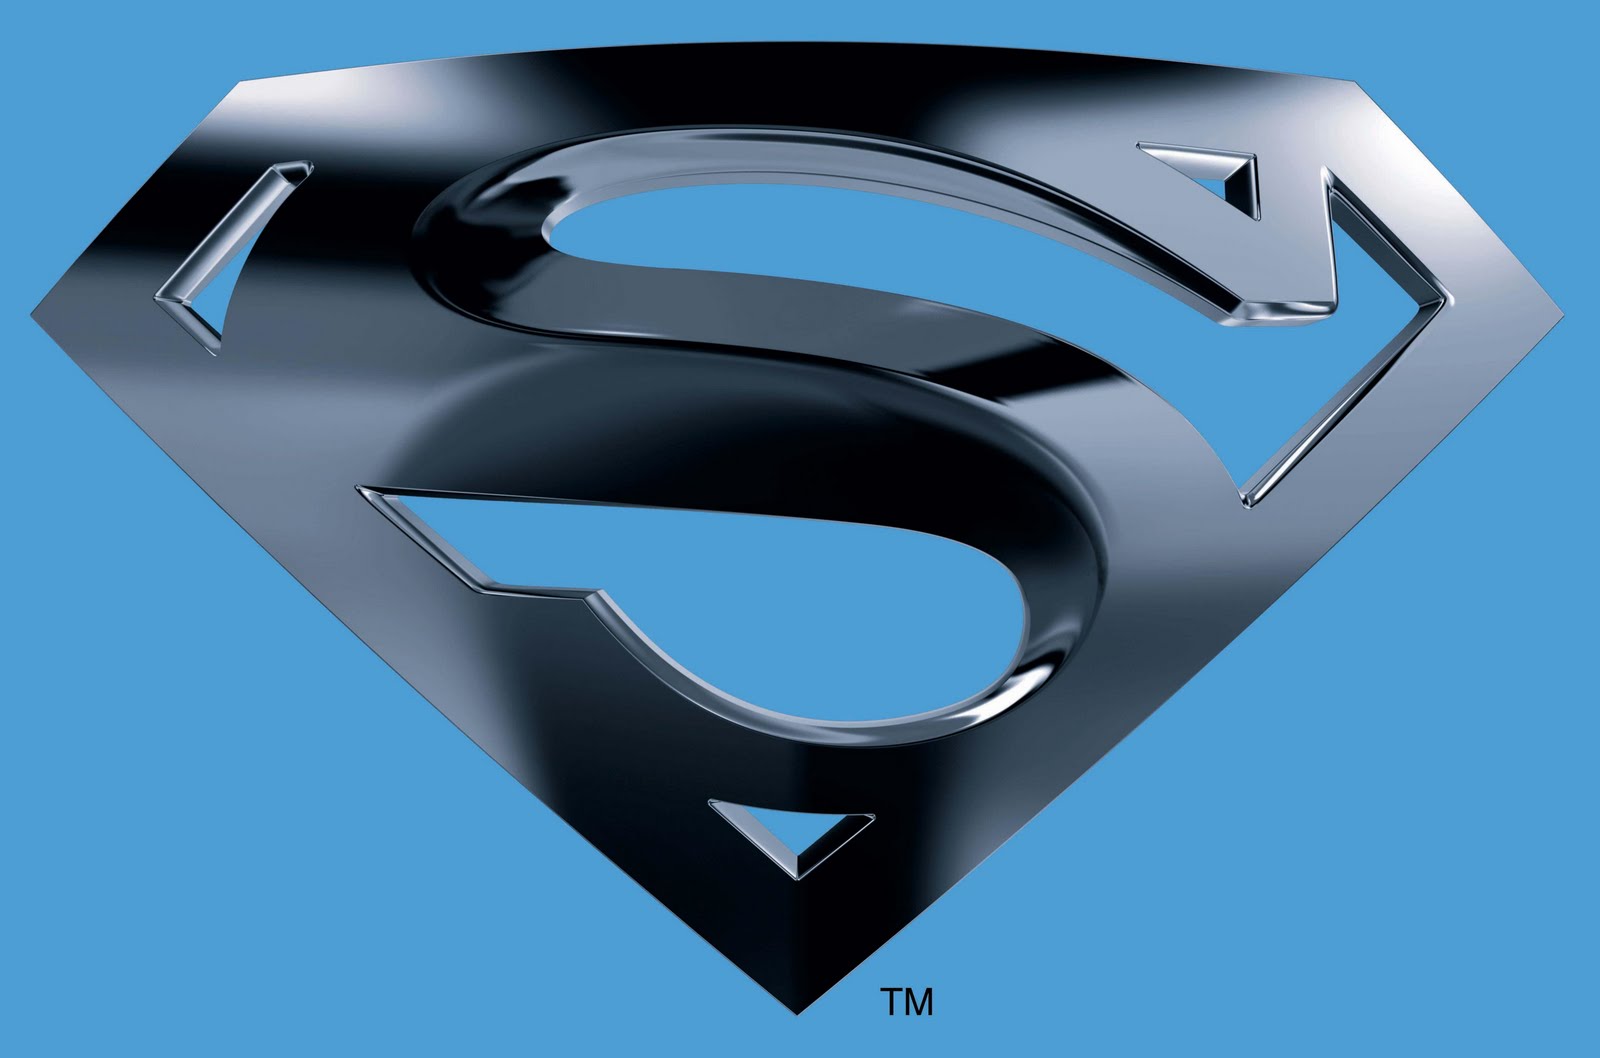 Box Superman S Logo High Definition Wallpaper Background HD